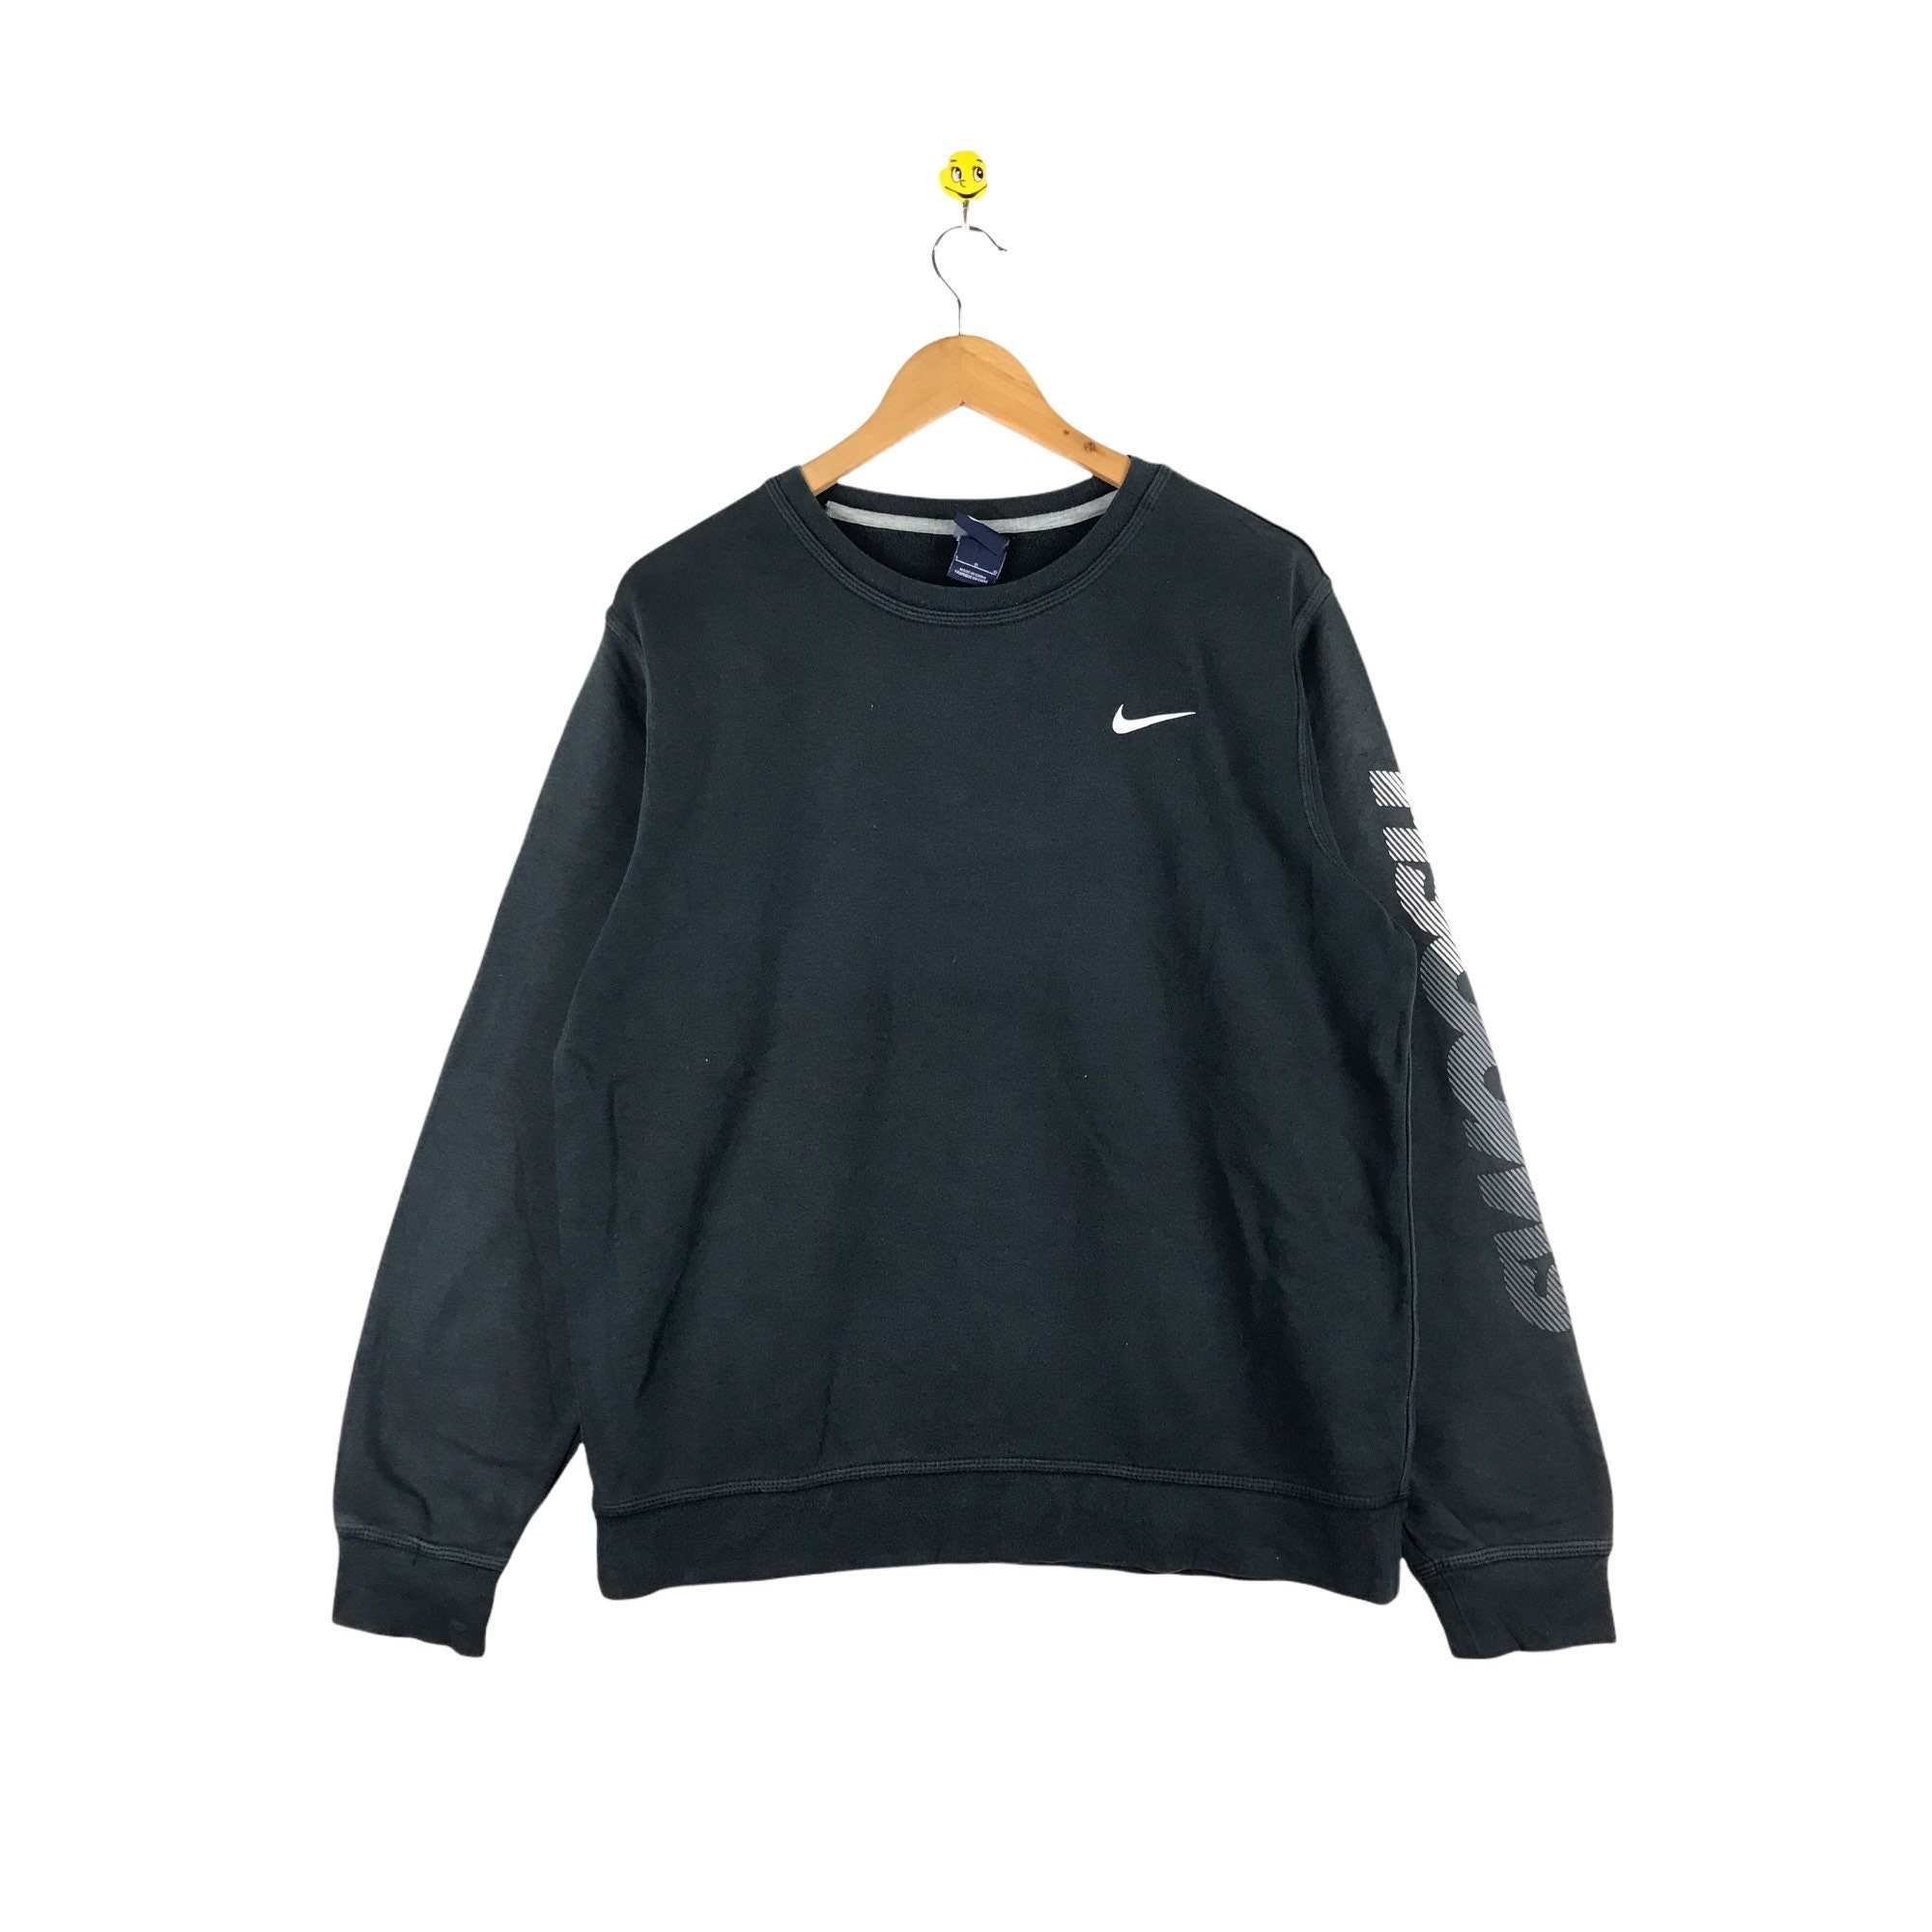 Denken Wrijven bericht Vintage Nike Sweatshirt / Nike Swoosh Sweater Sweatshirt / - Etsy Denmark